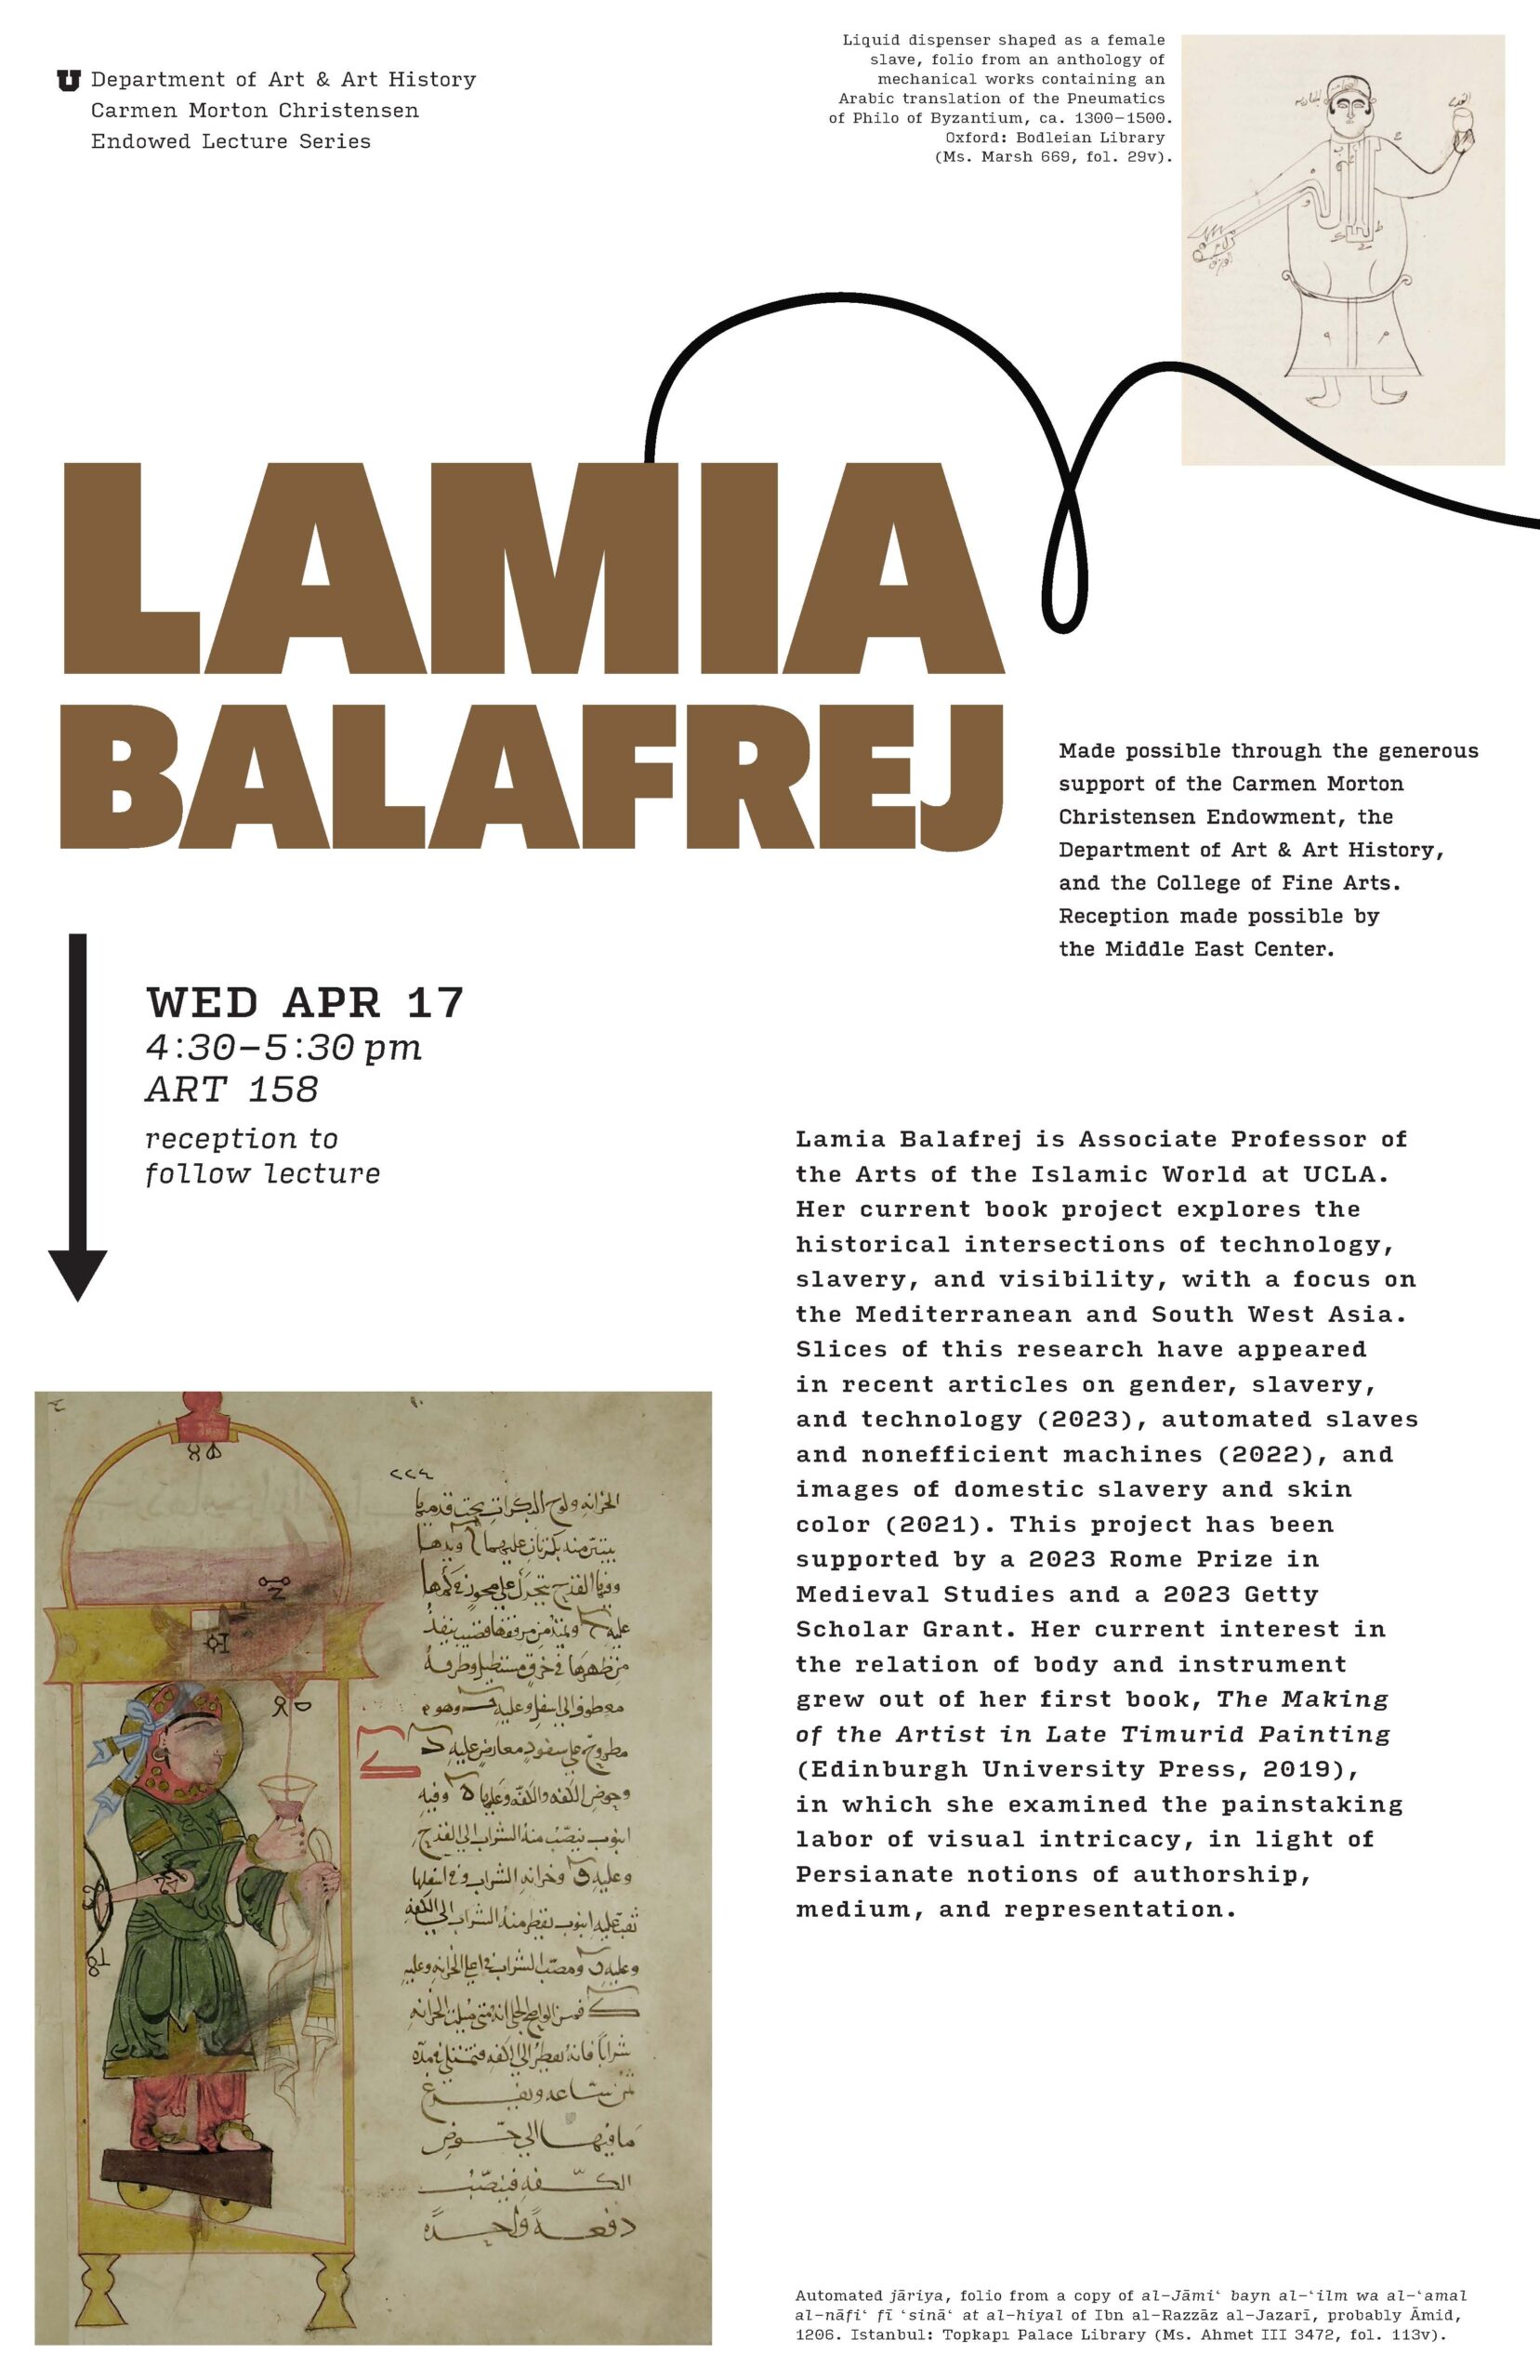 Lamia Balafrej art history talk poster